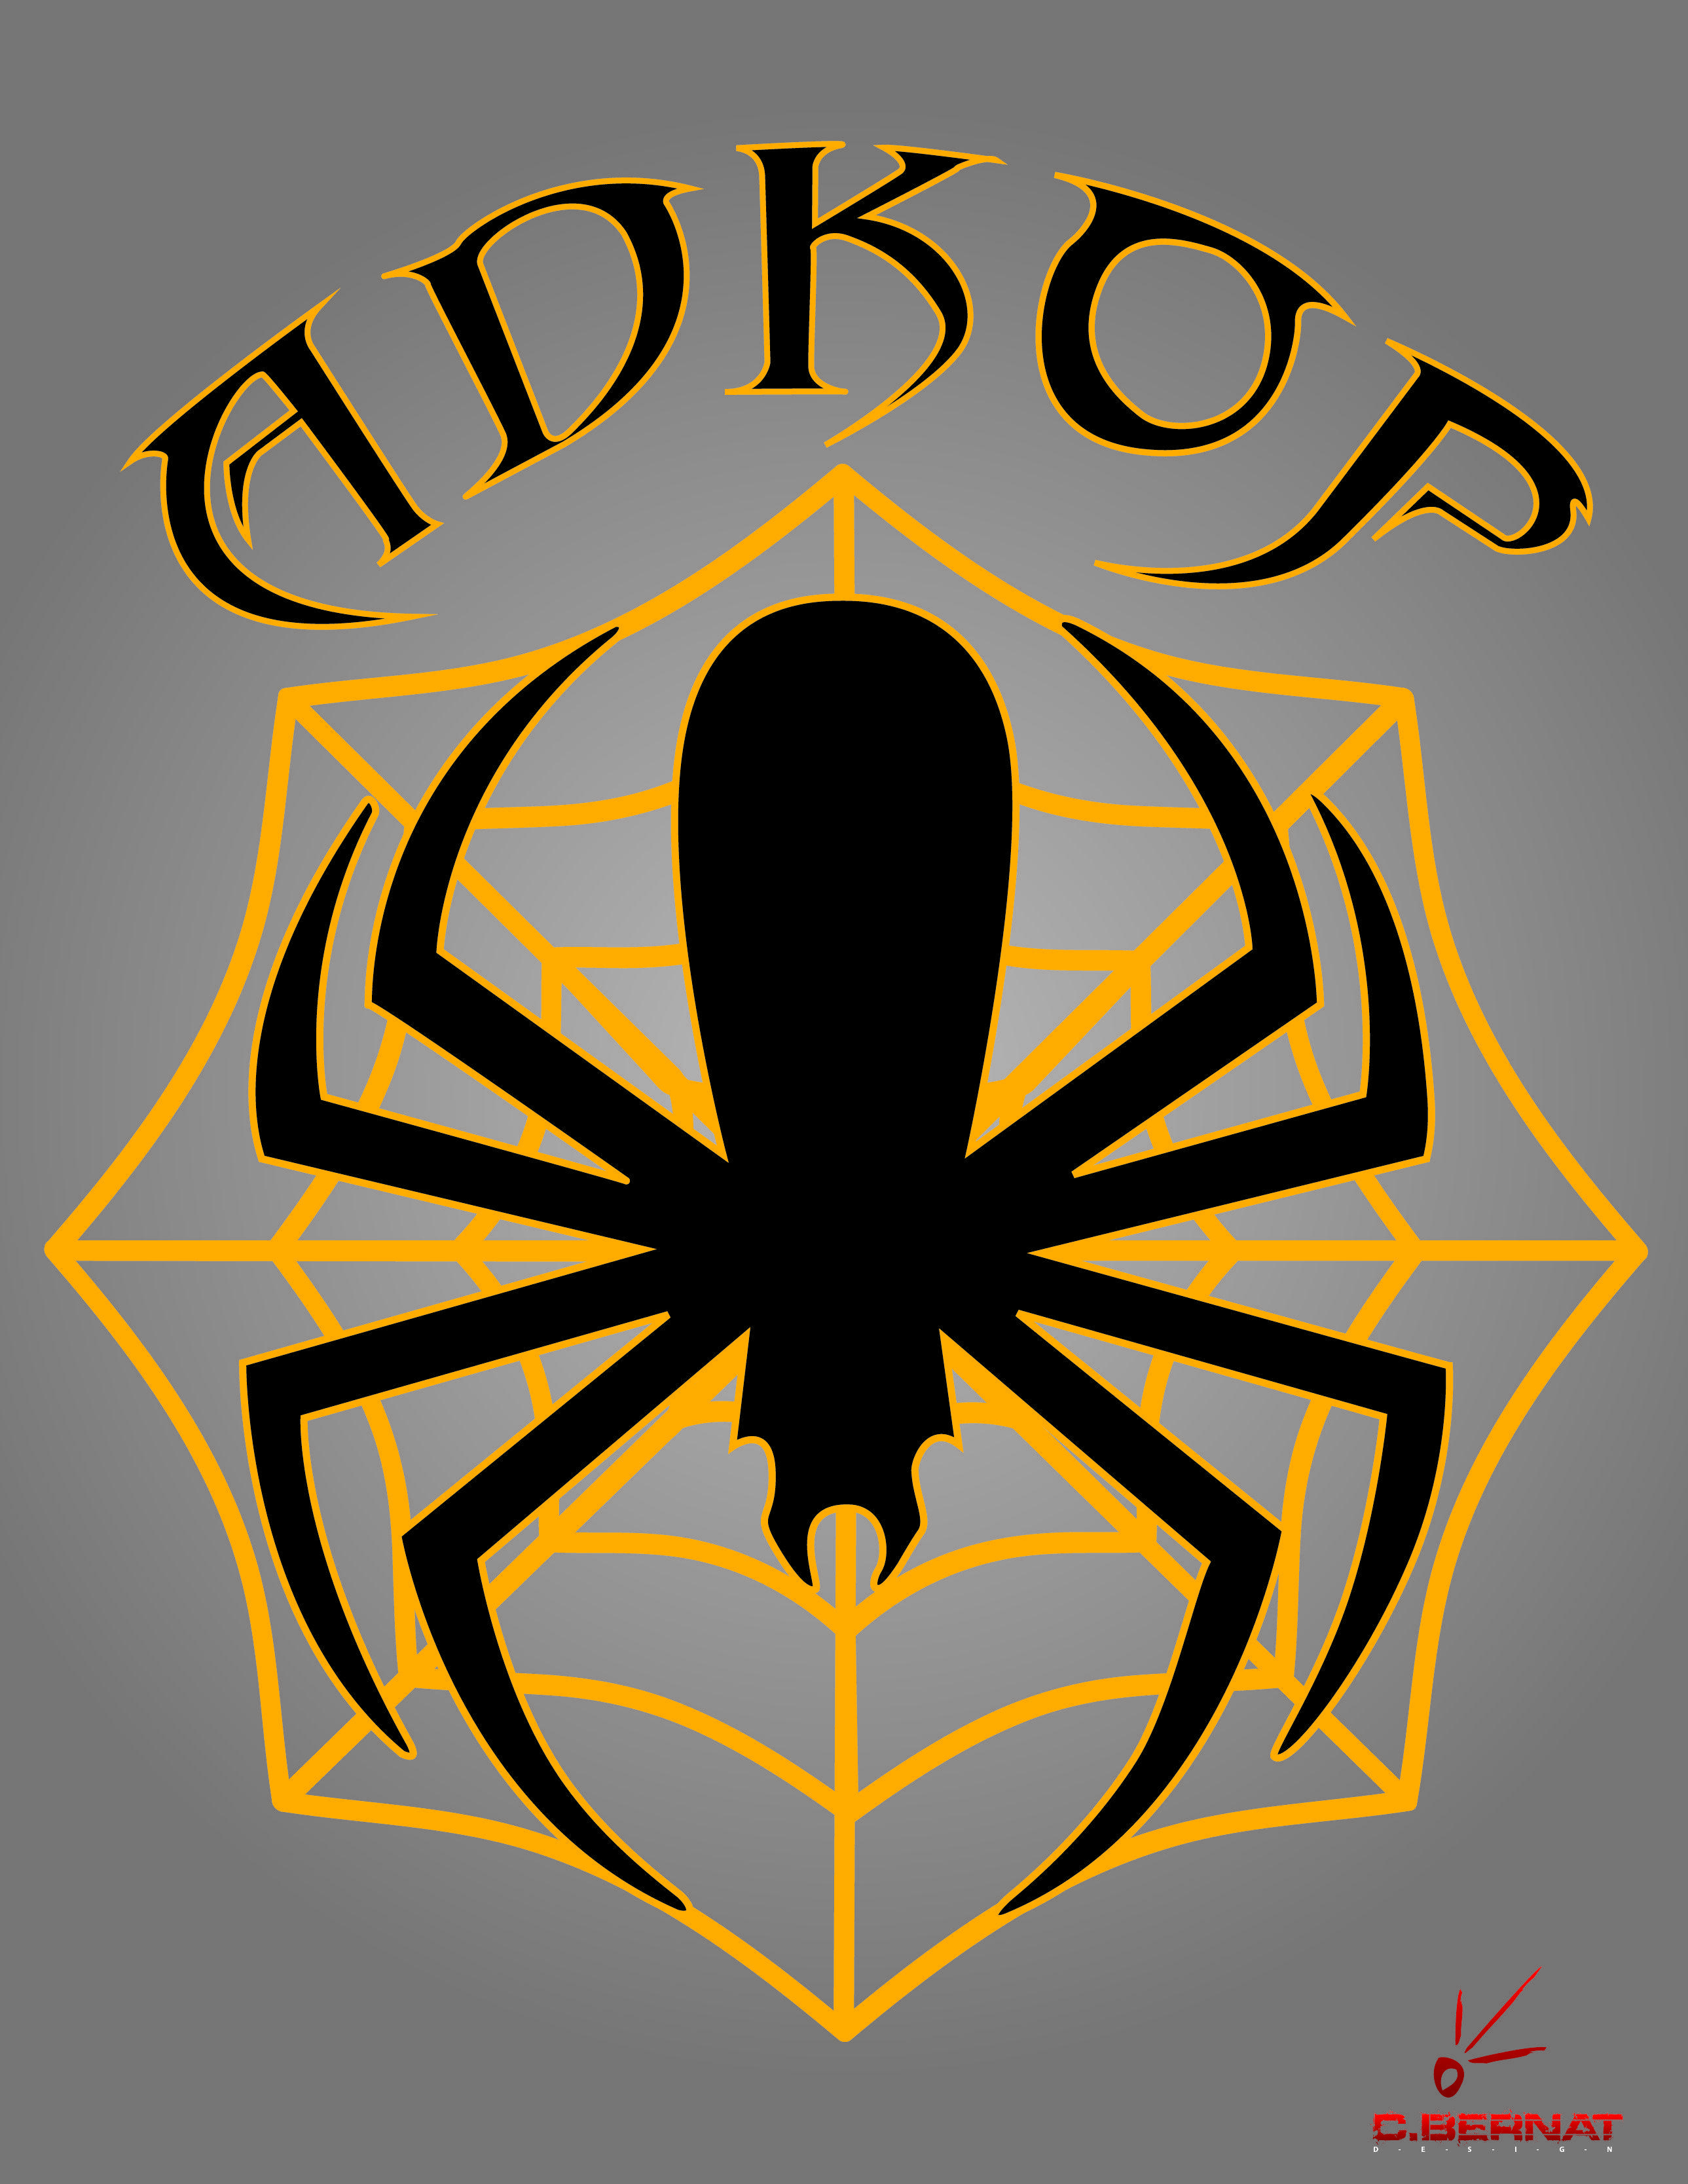 Cold Spider Logo - Cold – Spider Logo Poster & Tattoo Design | charles bernat